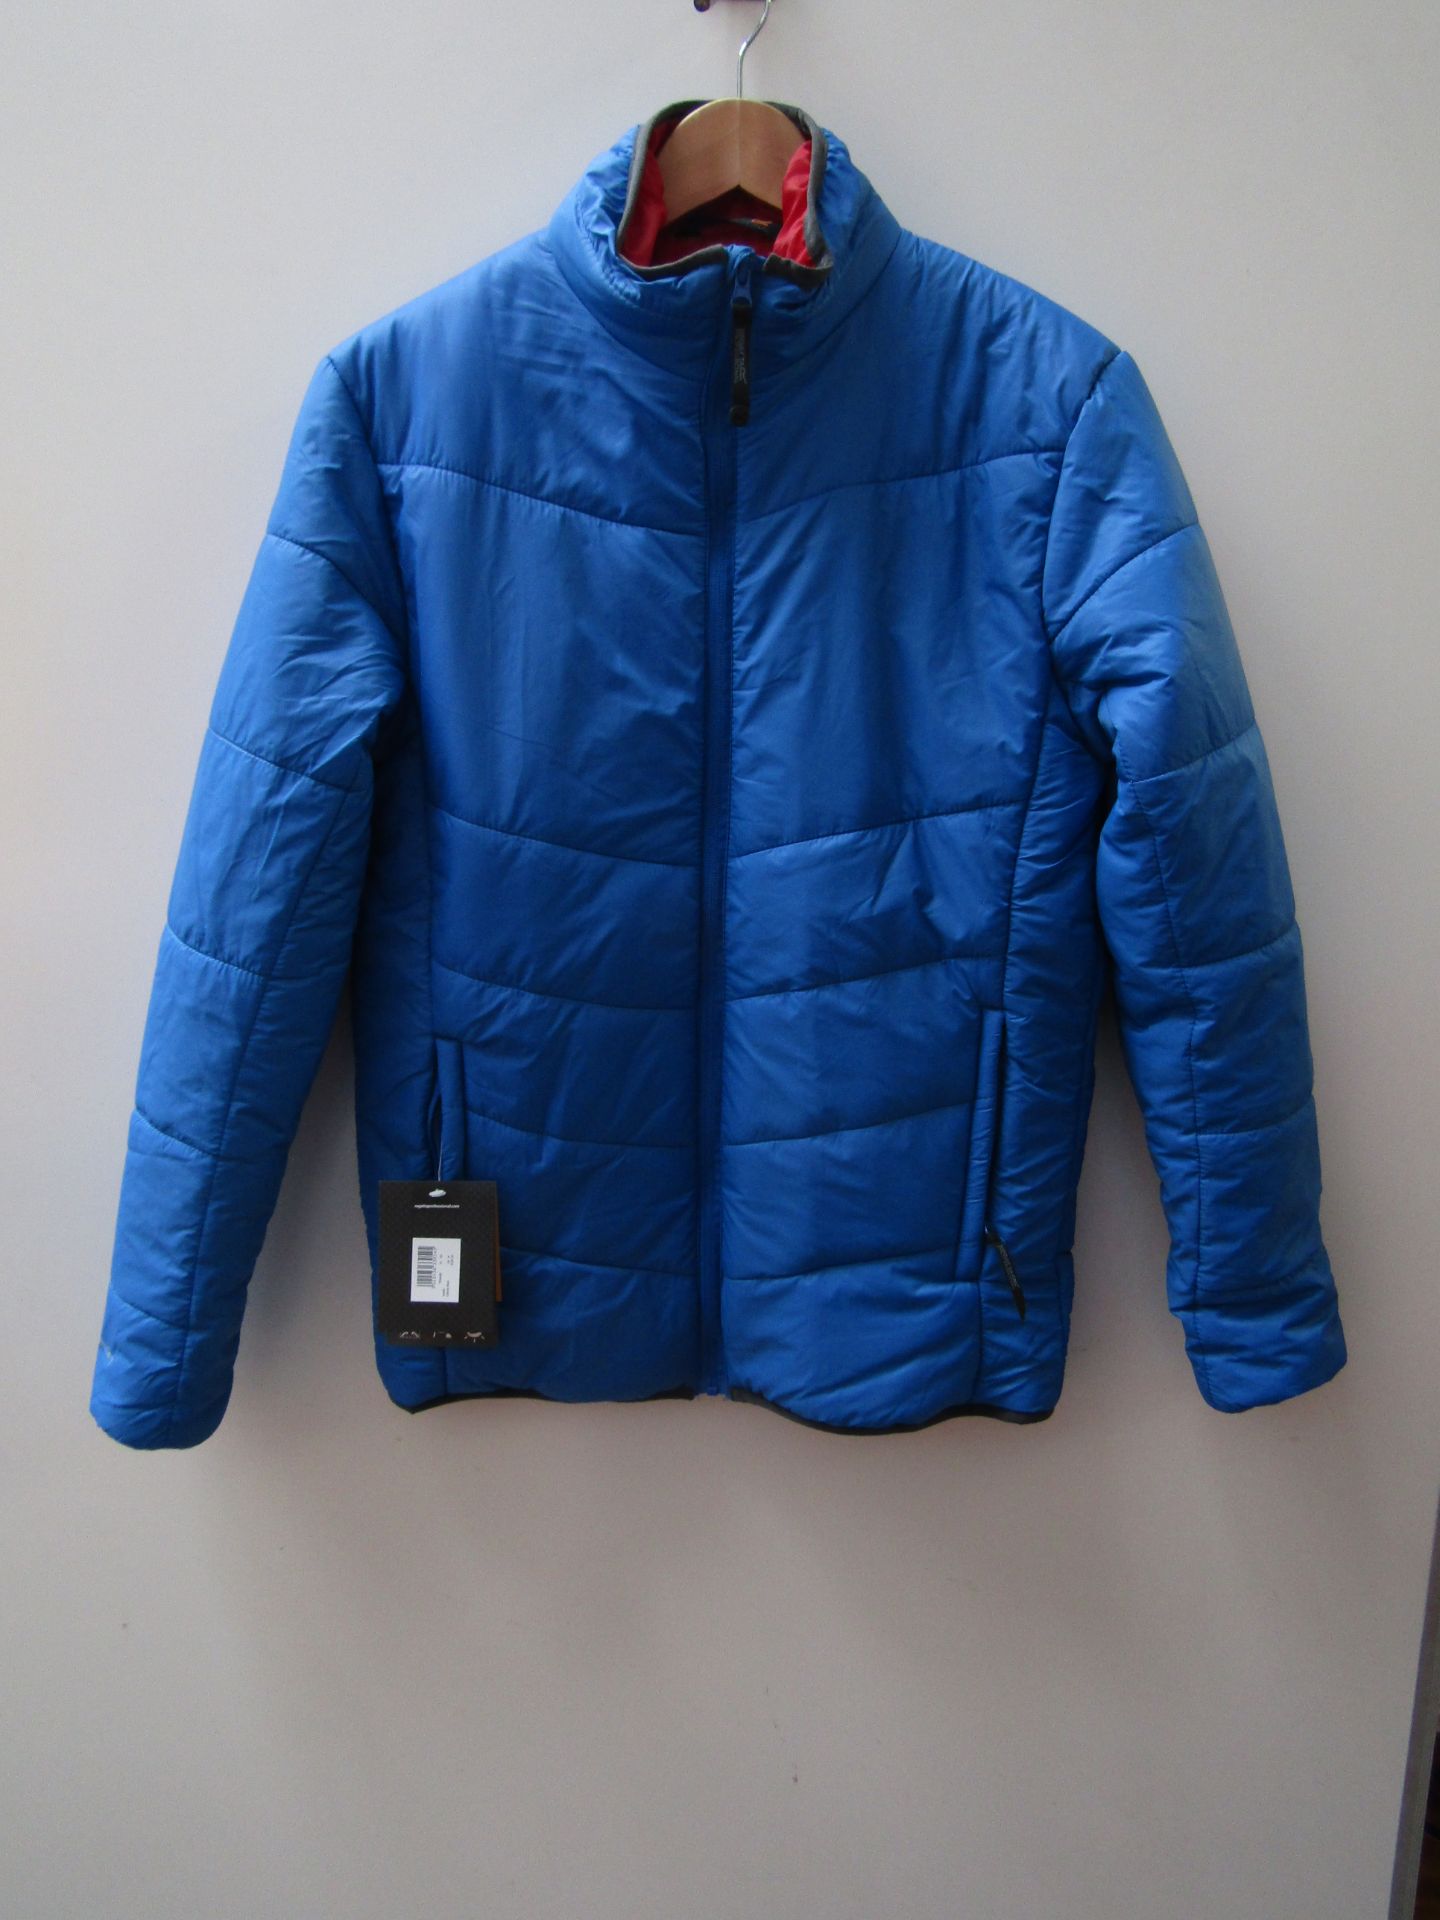 Regatta Professional, jacket Blue 100% Polyamide outer 100% Polyester lining & padding size Medium